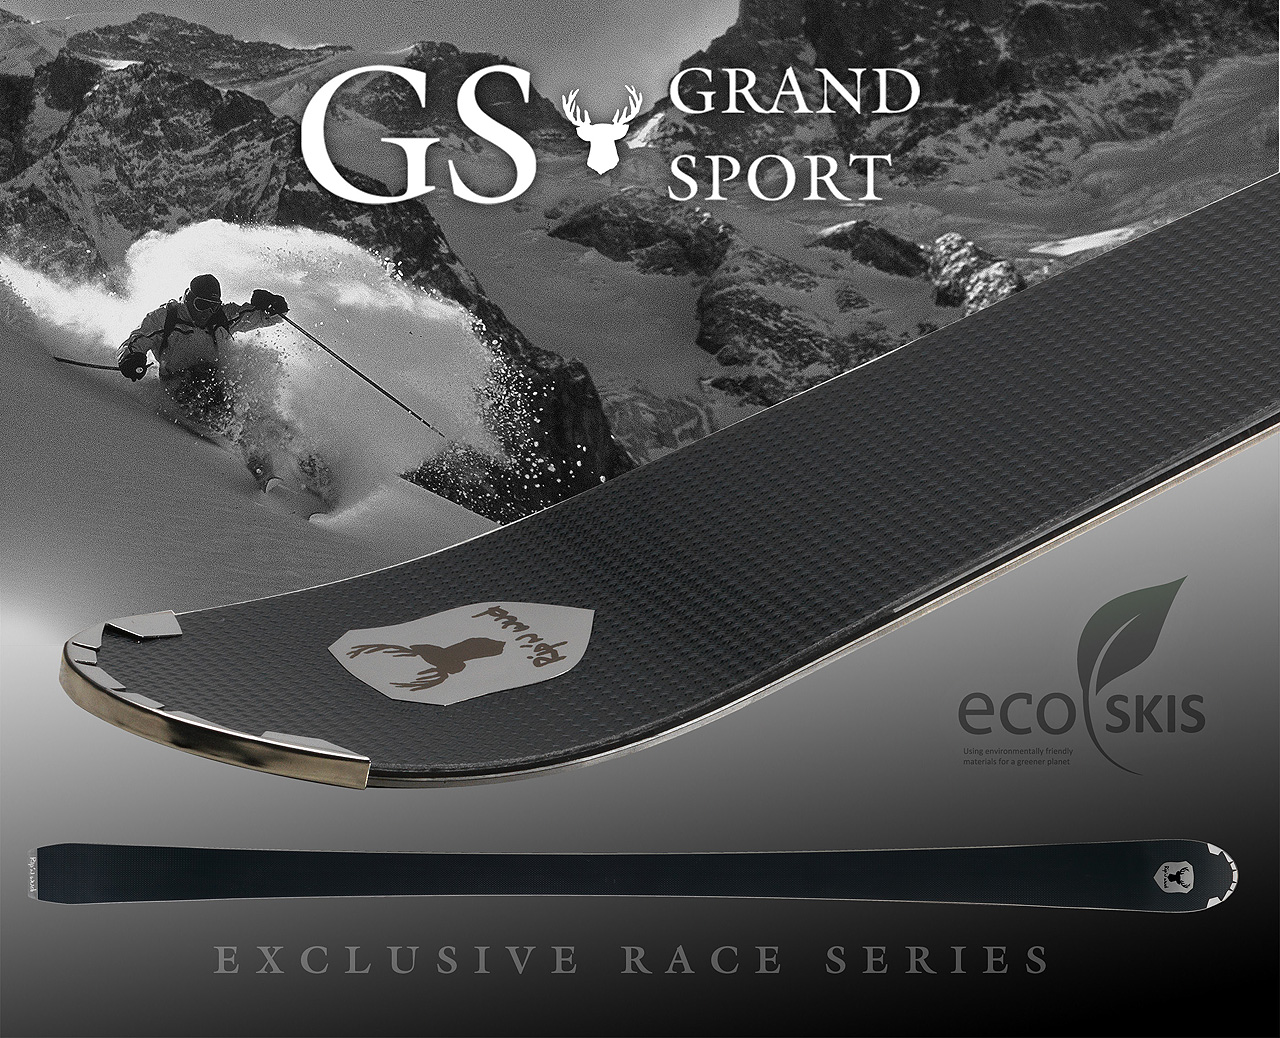 ripnwud handmade skis eco ski grand sport GS exclusive race series 2